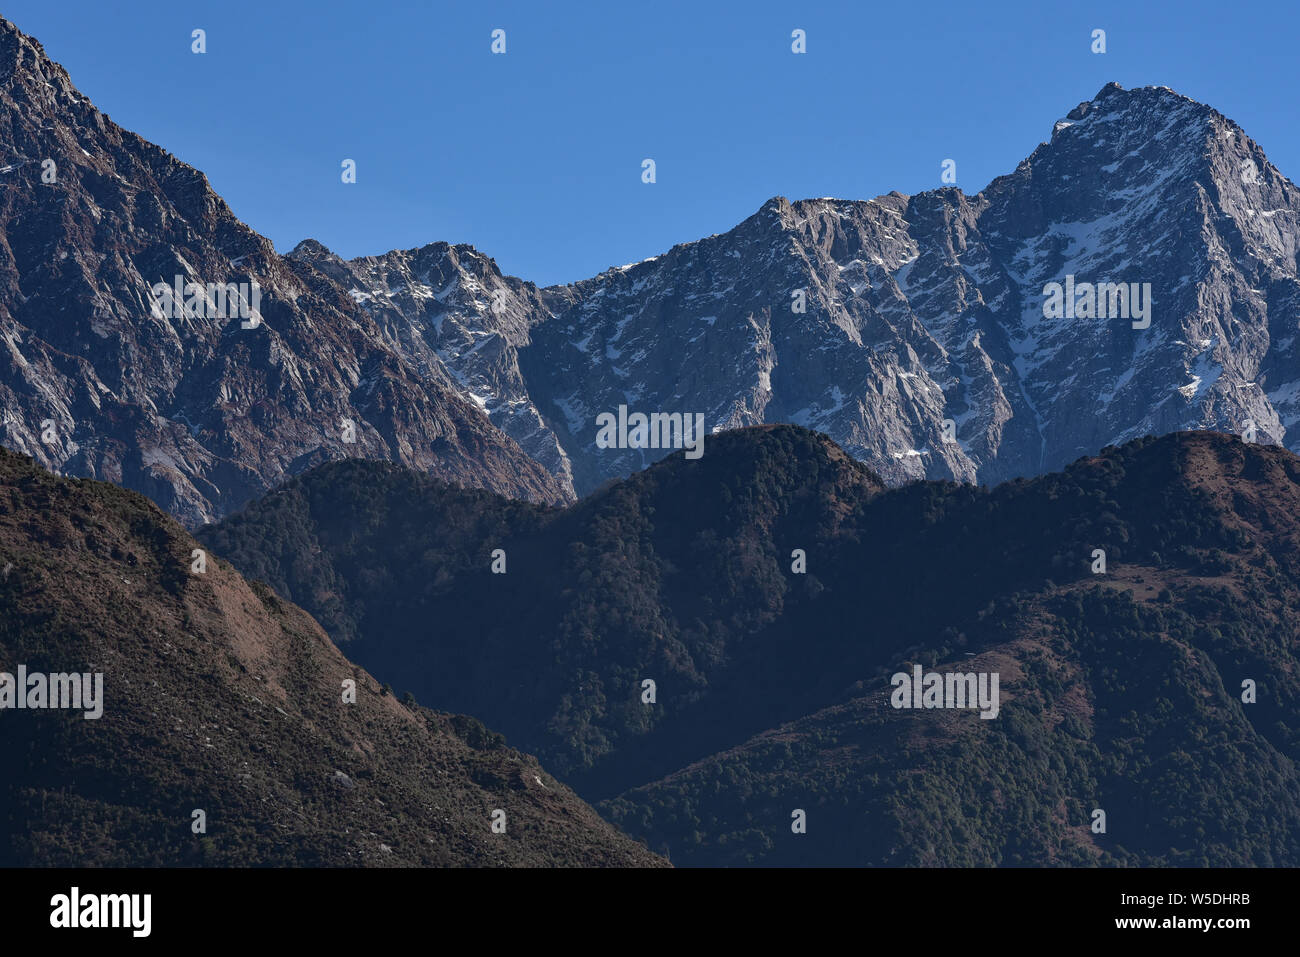 The dramatic rocky peaks of the Dhauladhar Range, part of the Lower Himalayan Range, McLeodganj, Kangra district, Himachal Pradesh, North India, Asia. Stock Photo